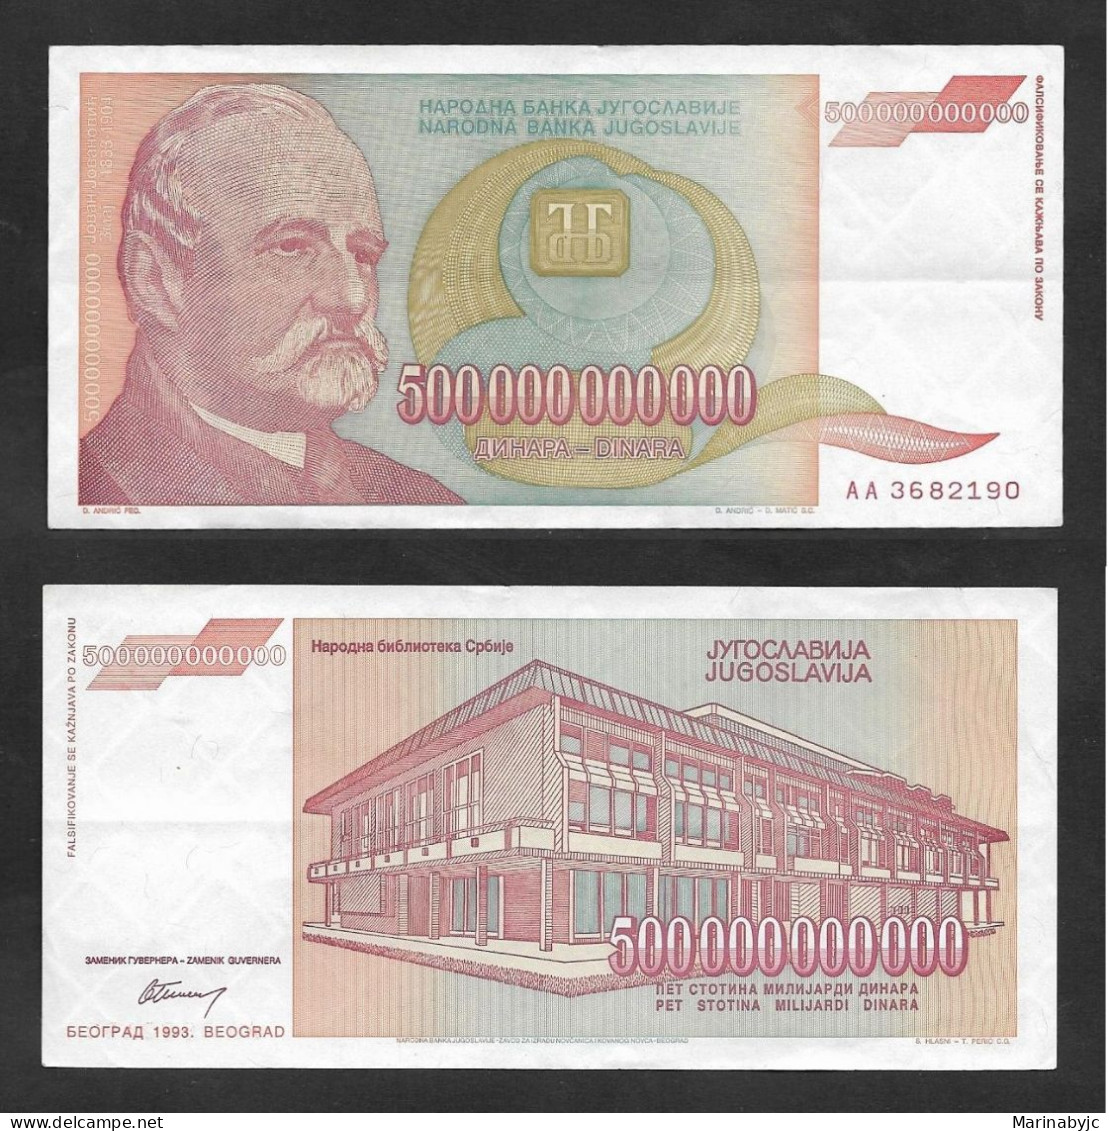 SE)1993 YUGOSLAVIA, BANKNOTE OF 500,000,000,000 DINARS OF THE CENTRAL BANK OF YUGOSLAVIA, WITH REVERSE, VF - Usati